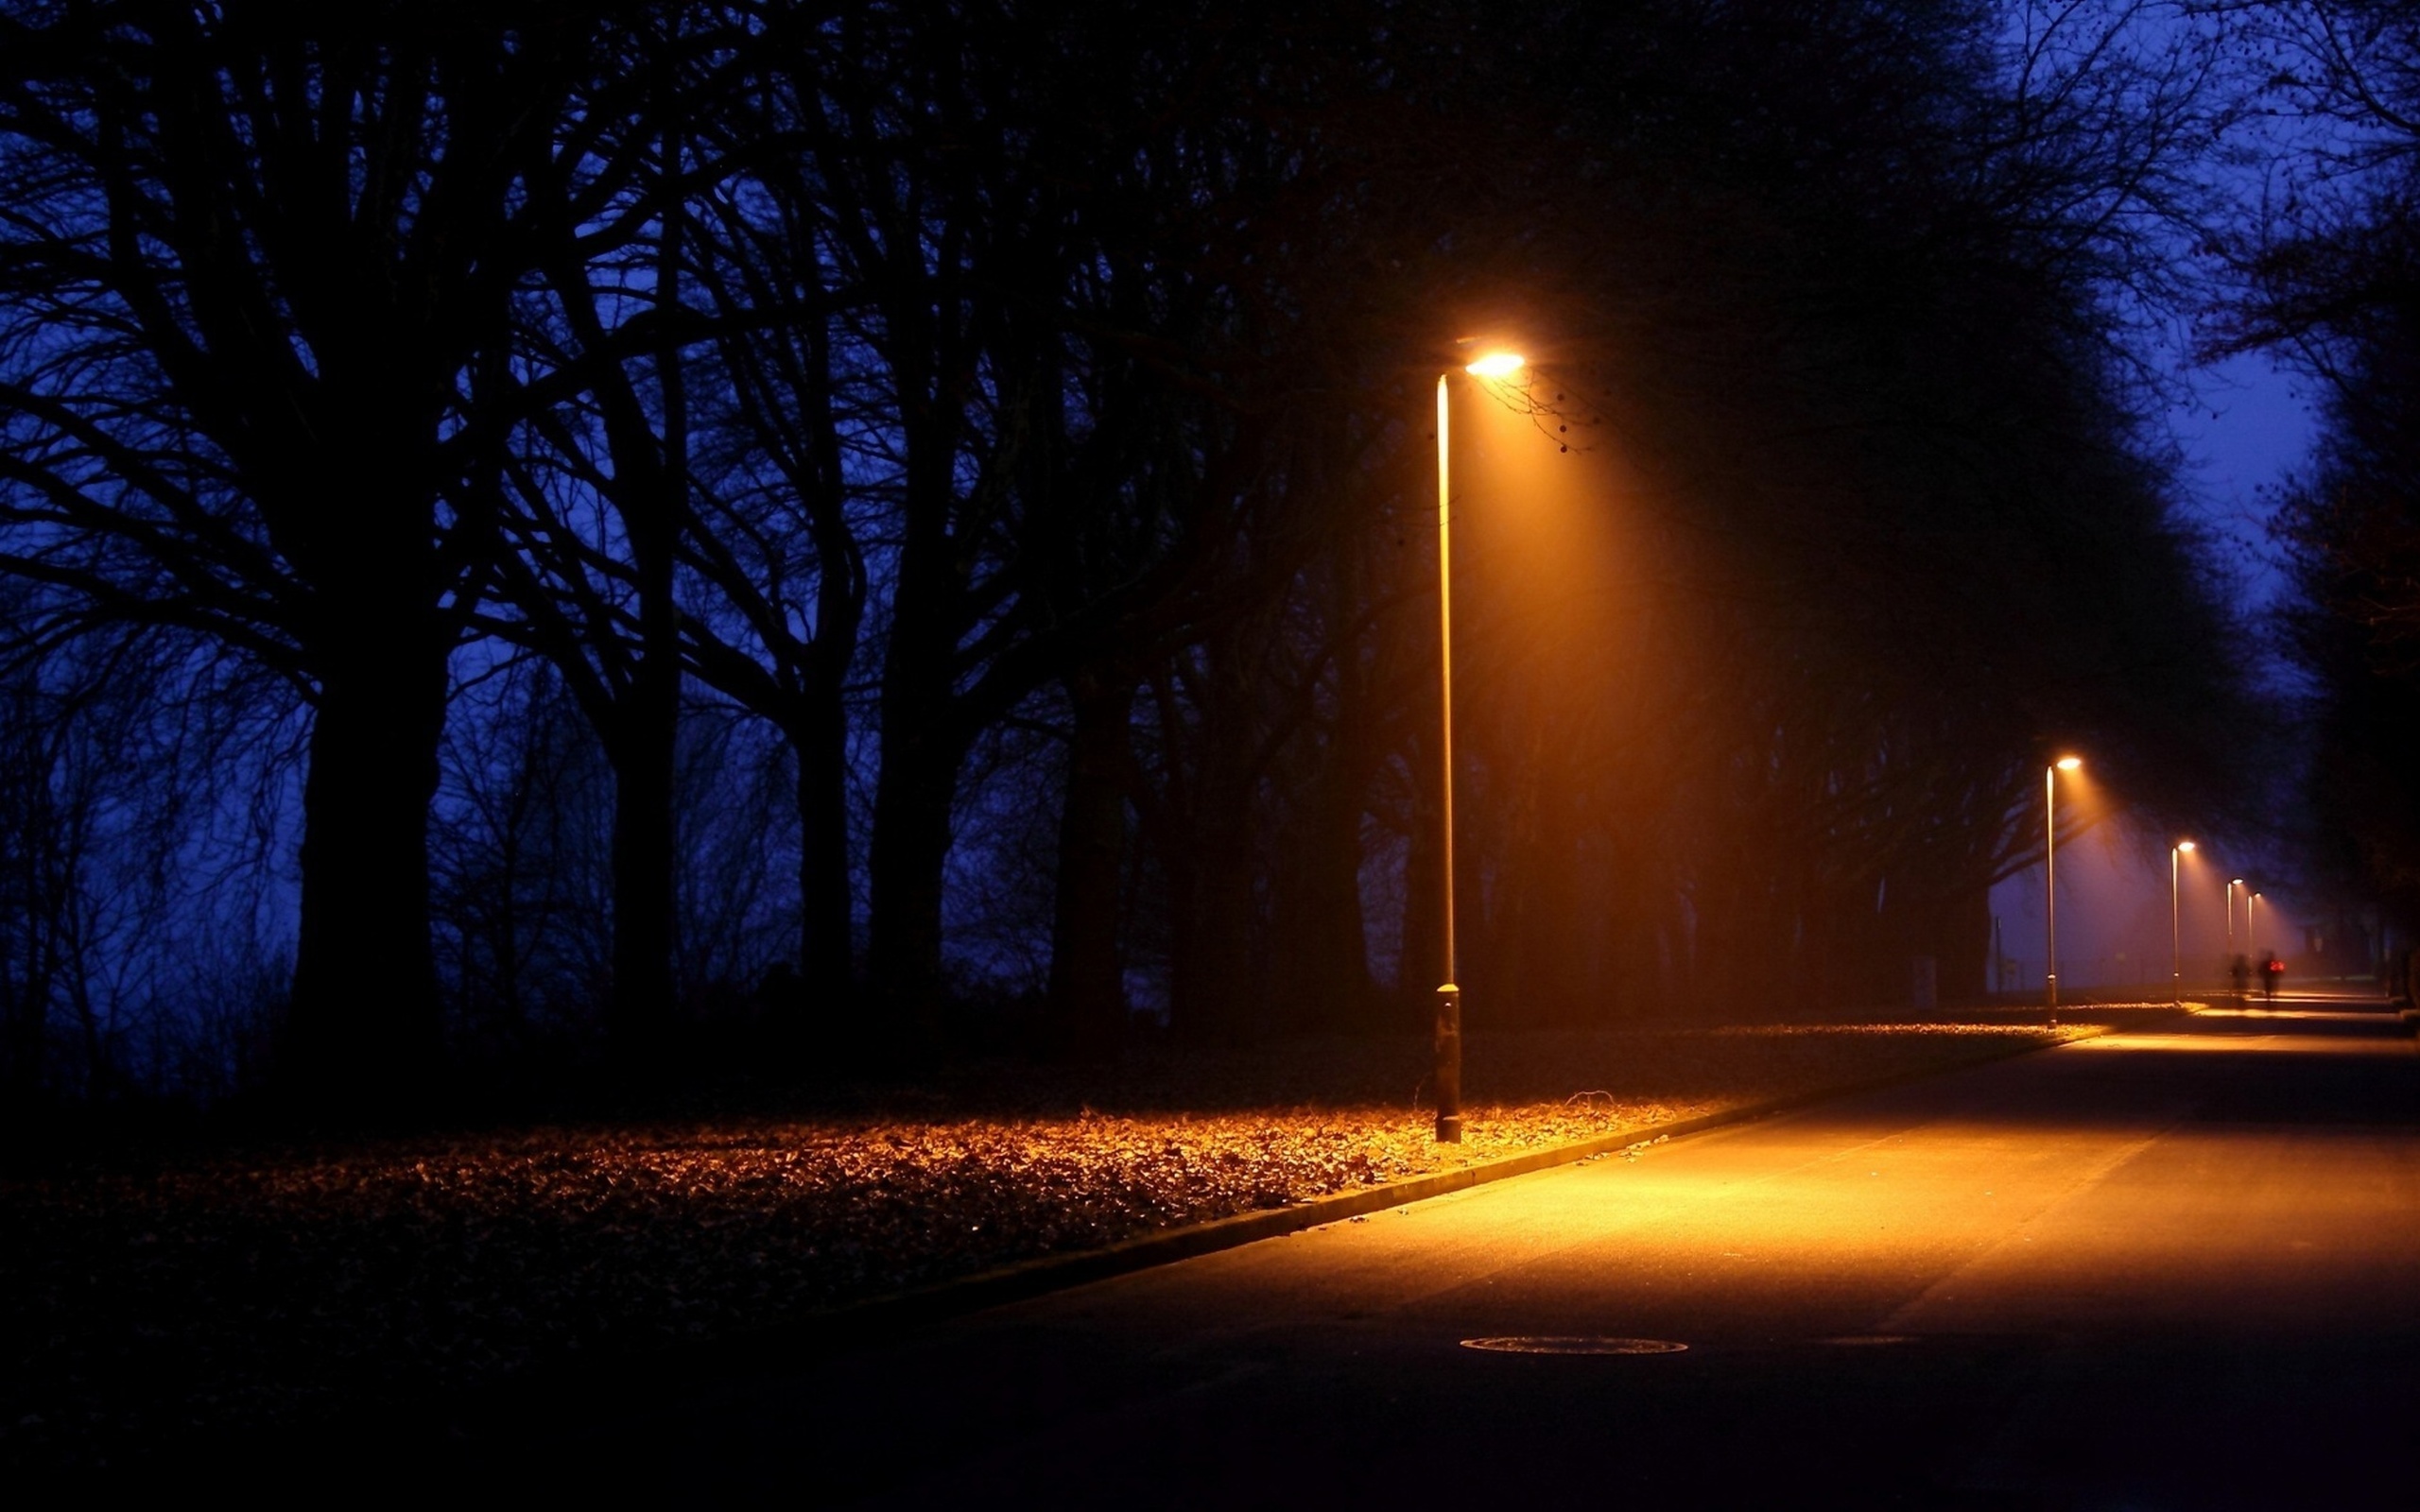 Городу нужен свет. Ночная улица с фонарями. Фонарь ночью. Уличный фонарь ночью. Ночной парк с фонарями.